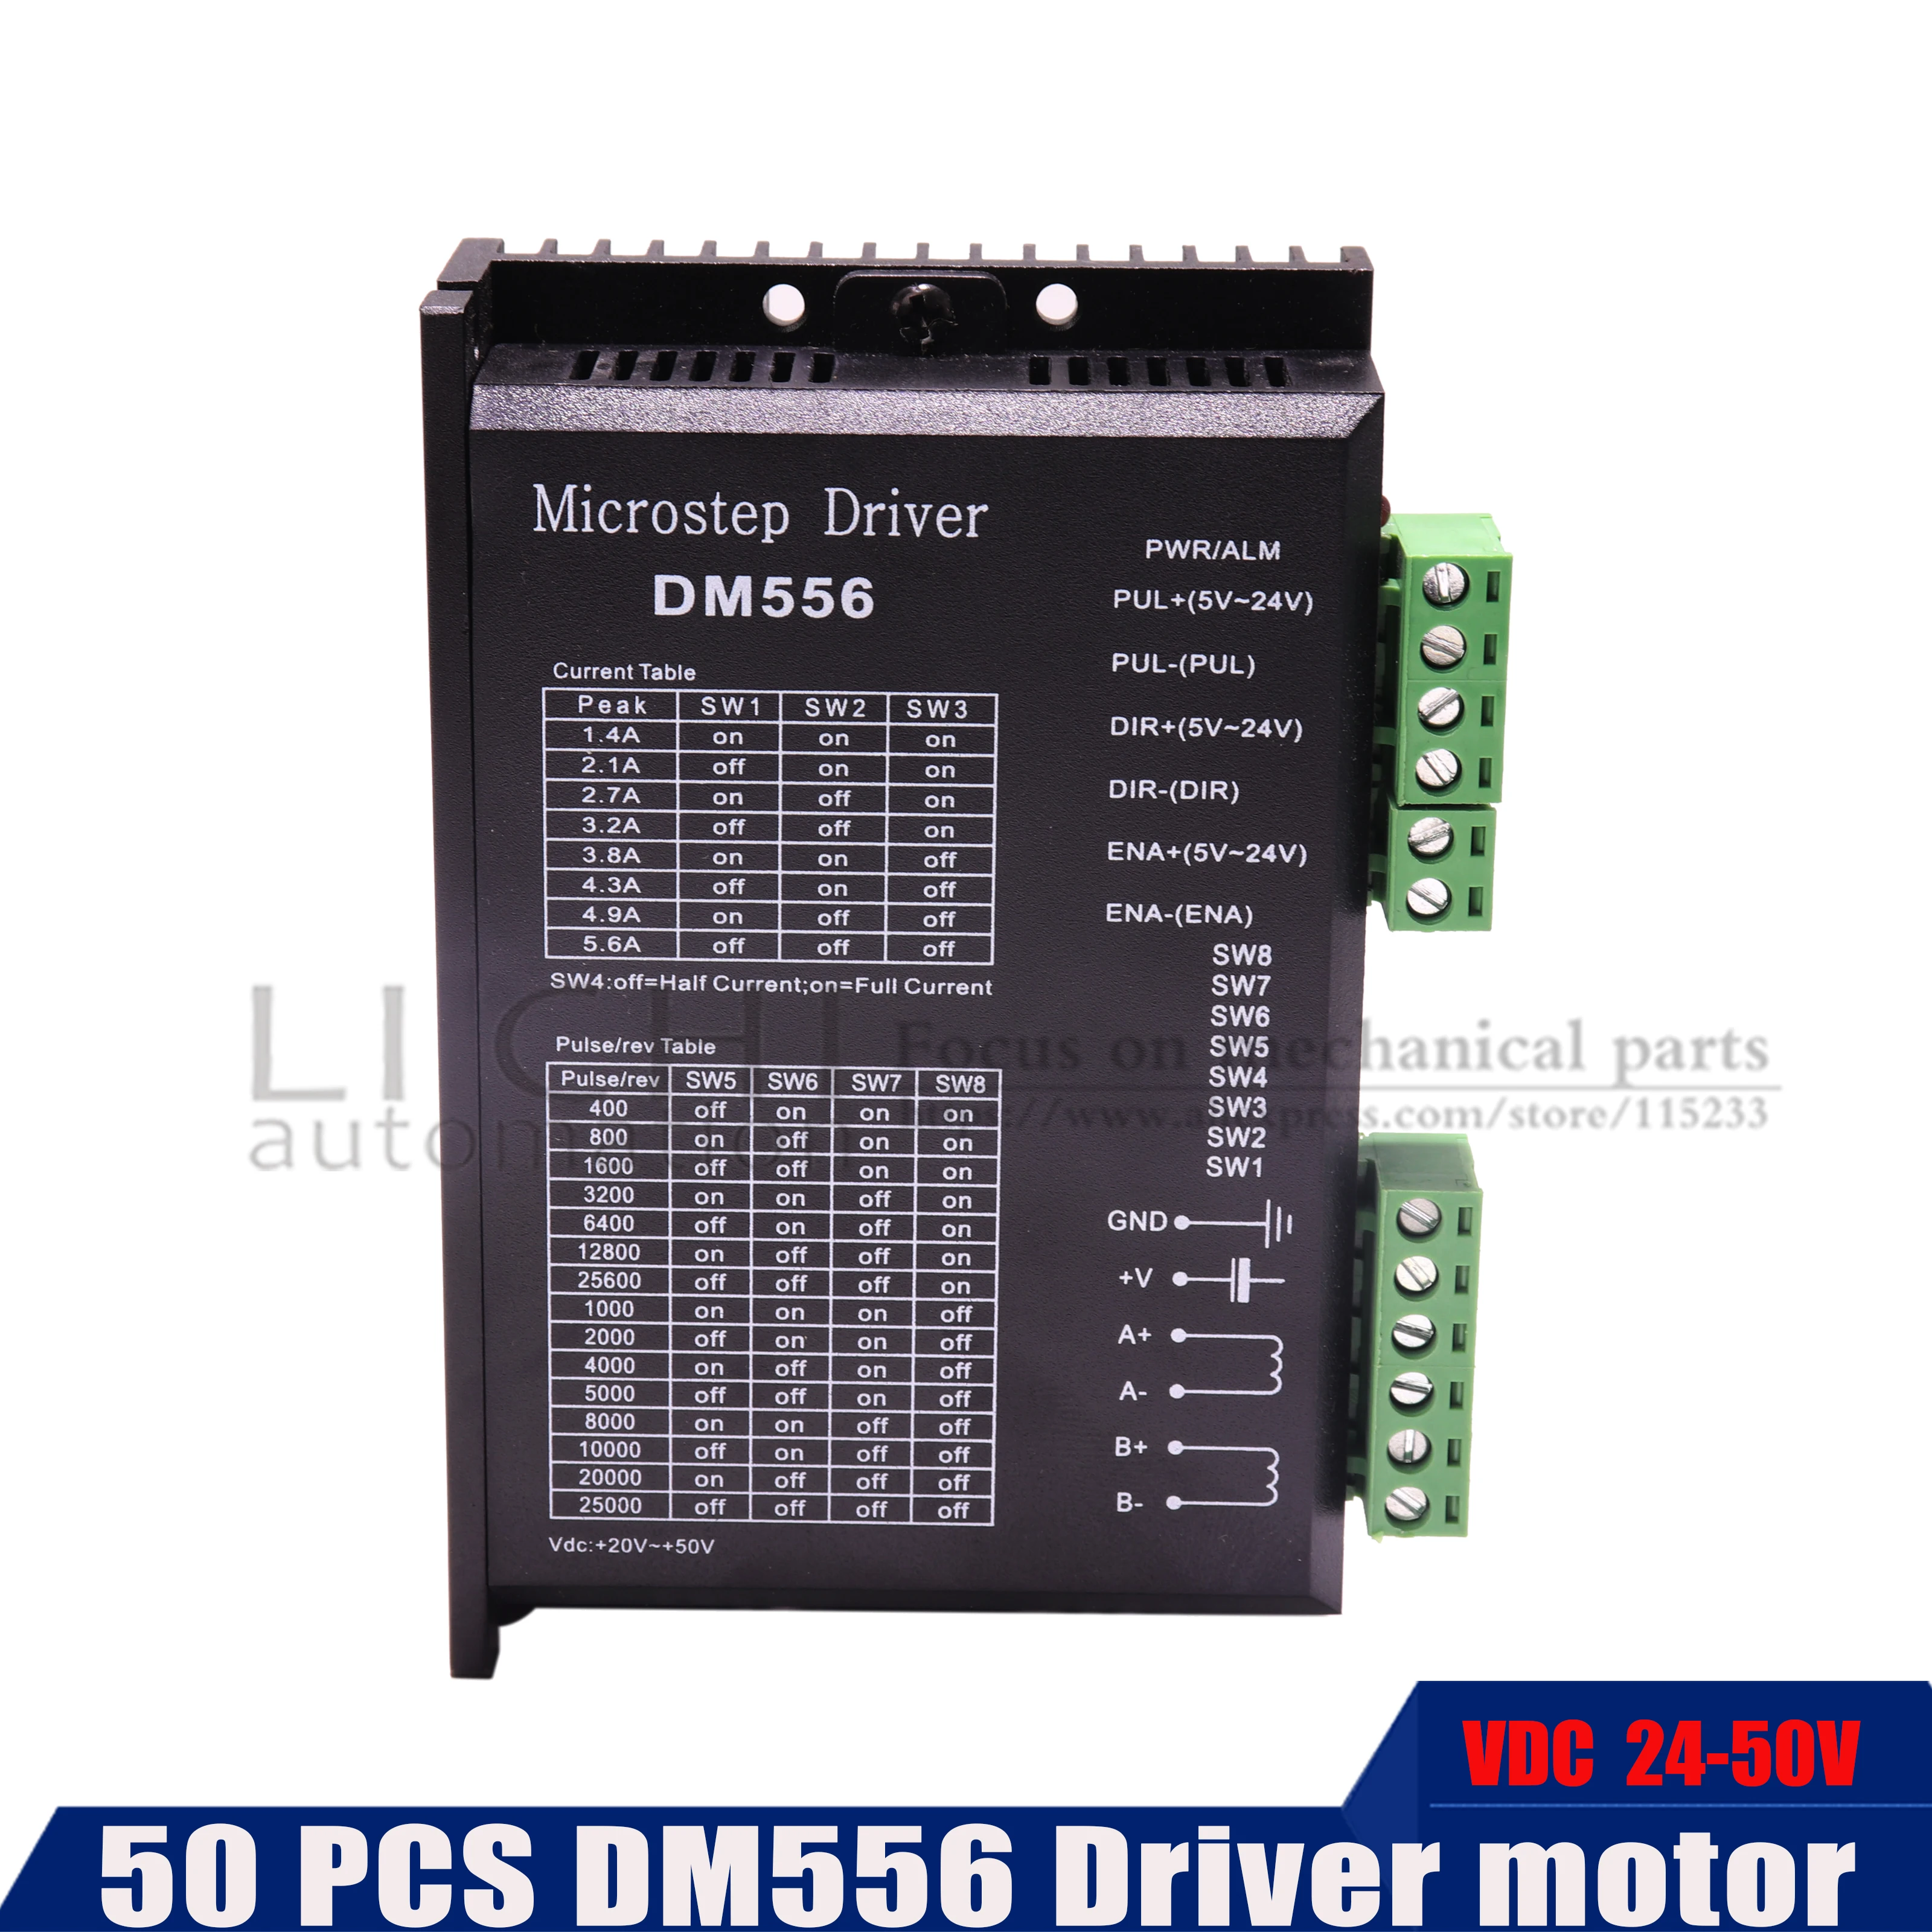 

DM556 Digital Stepper motor driver 50PCS 2 phase 5.6A for 57 86 stepper motor NEMA17 /23 /34 Stepper Motor Controller